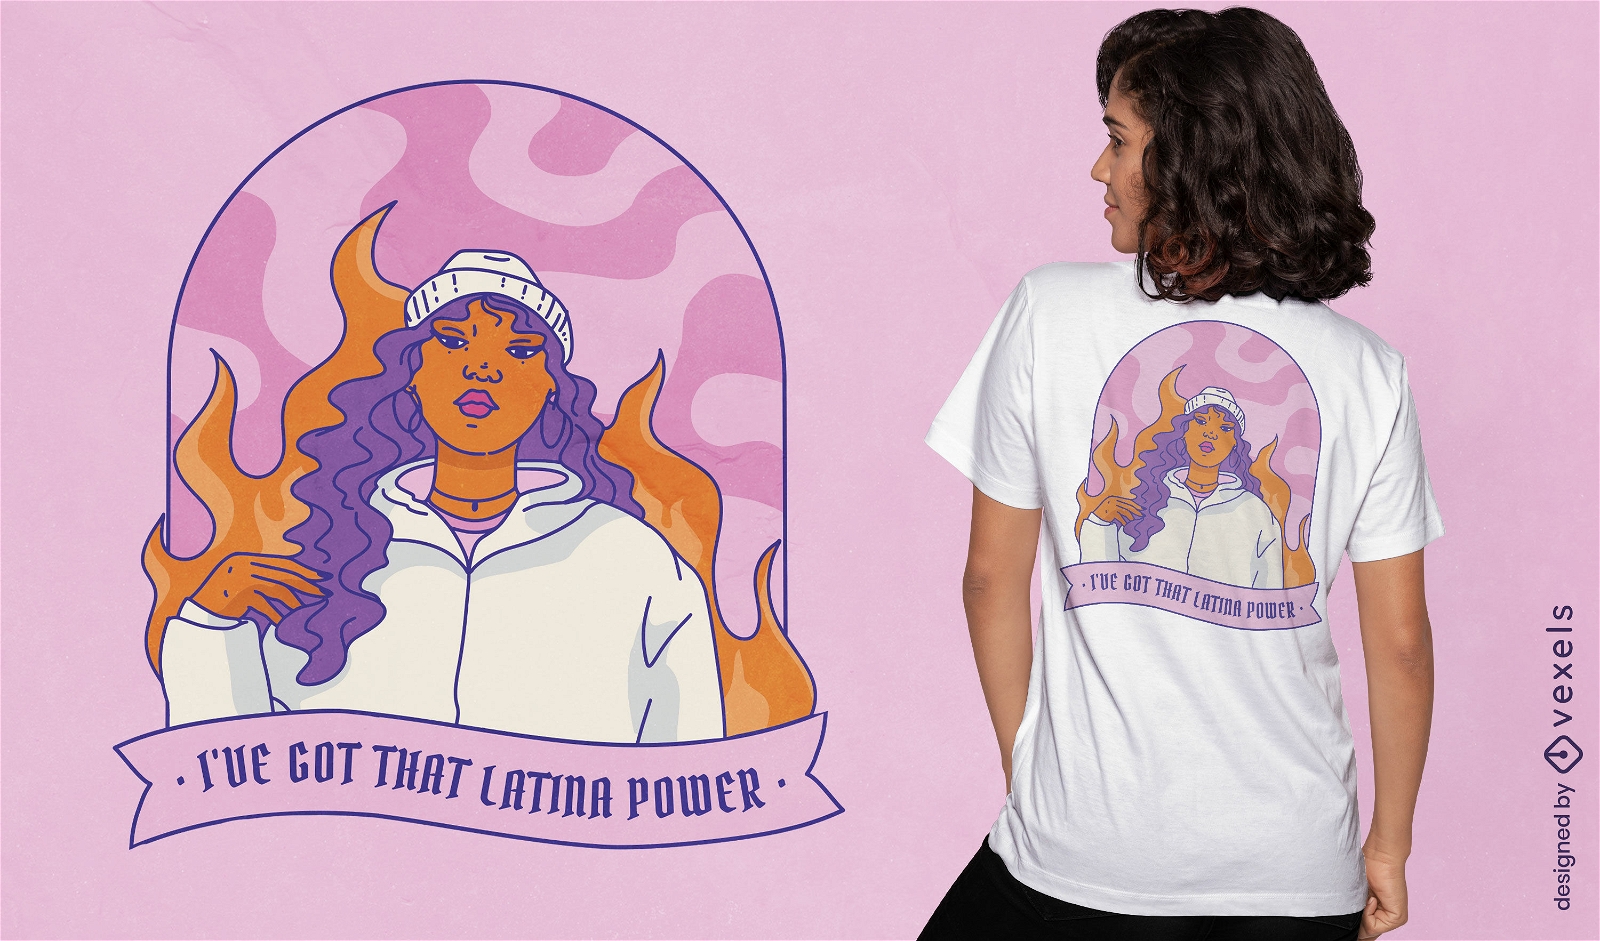 Latin feminist woman t-shirt design